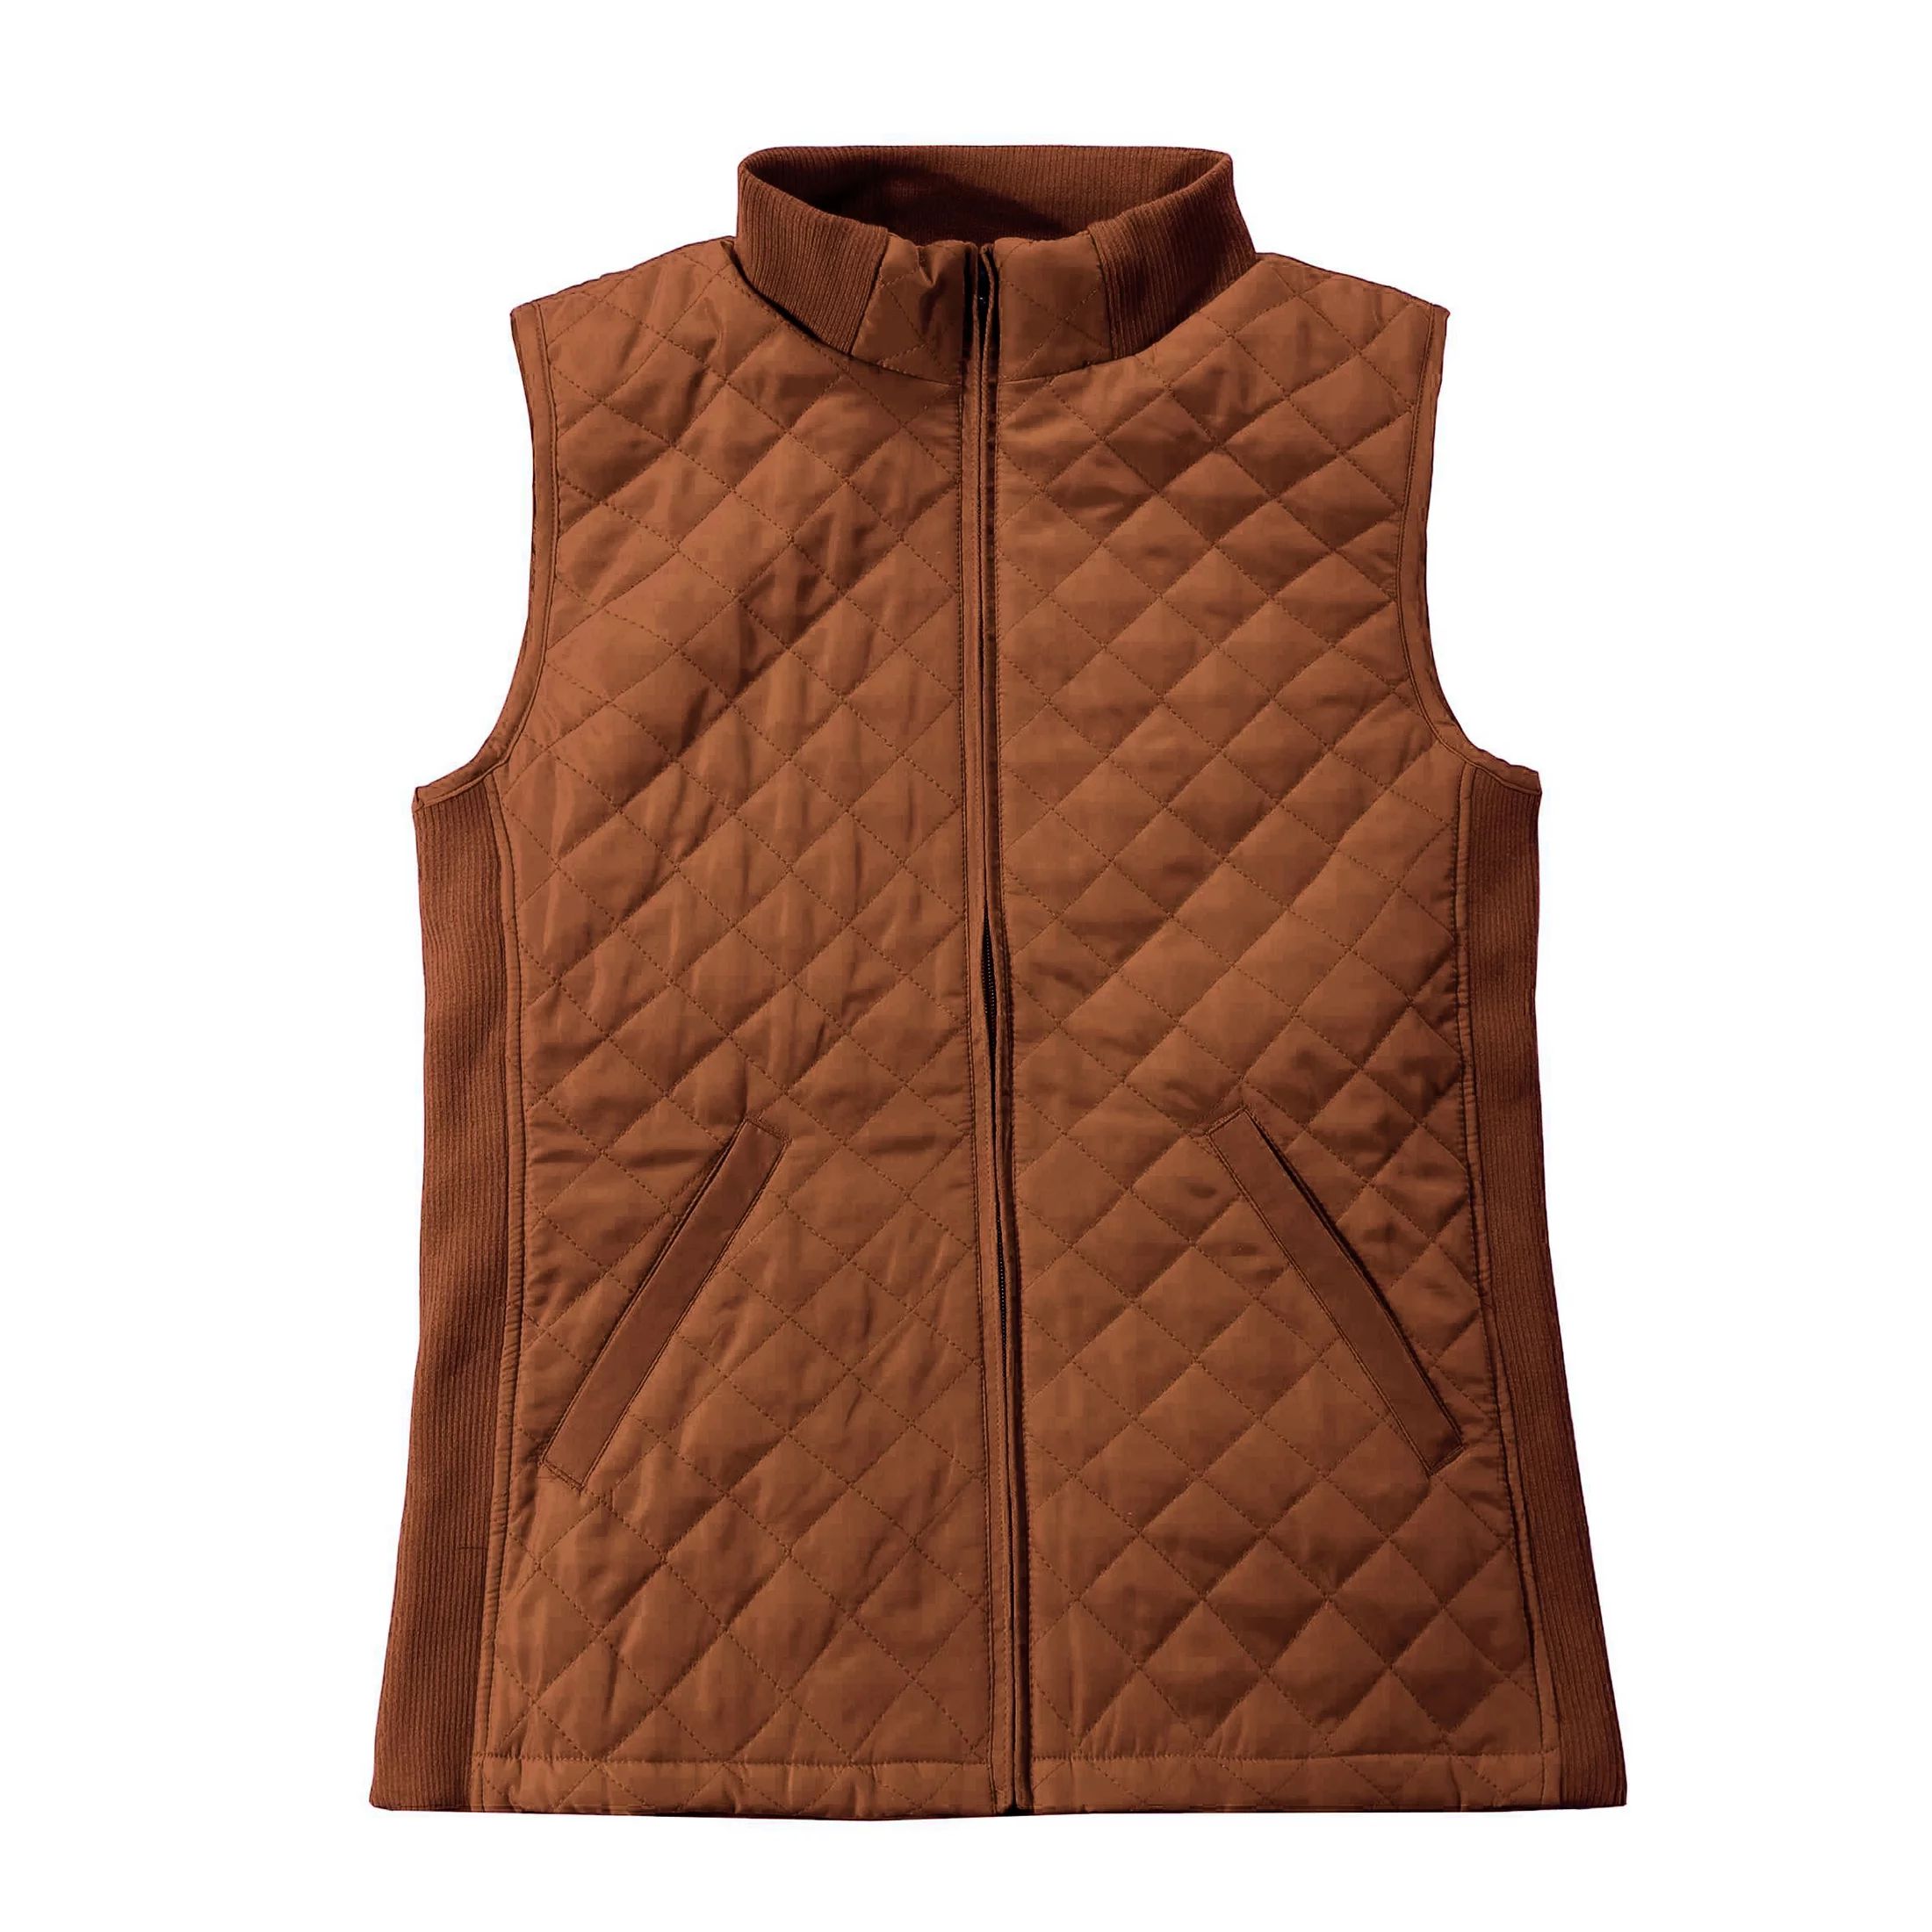 Bienzoe Women Casual Quilted Sleeveless Light Weight Vest Chocolate XL | Walmart (US)